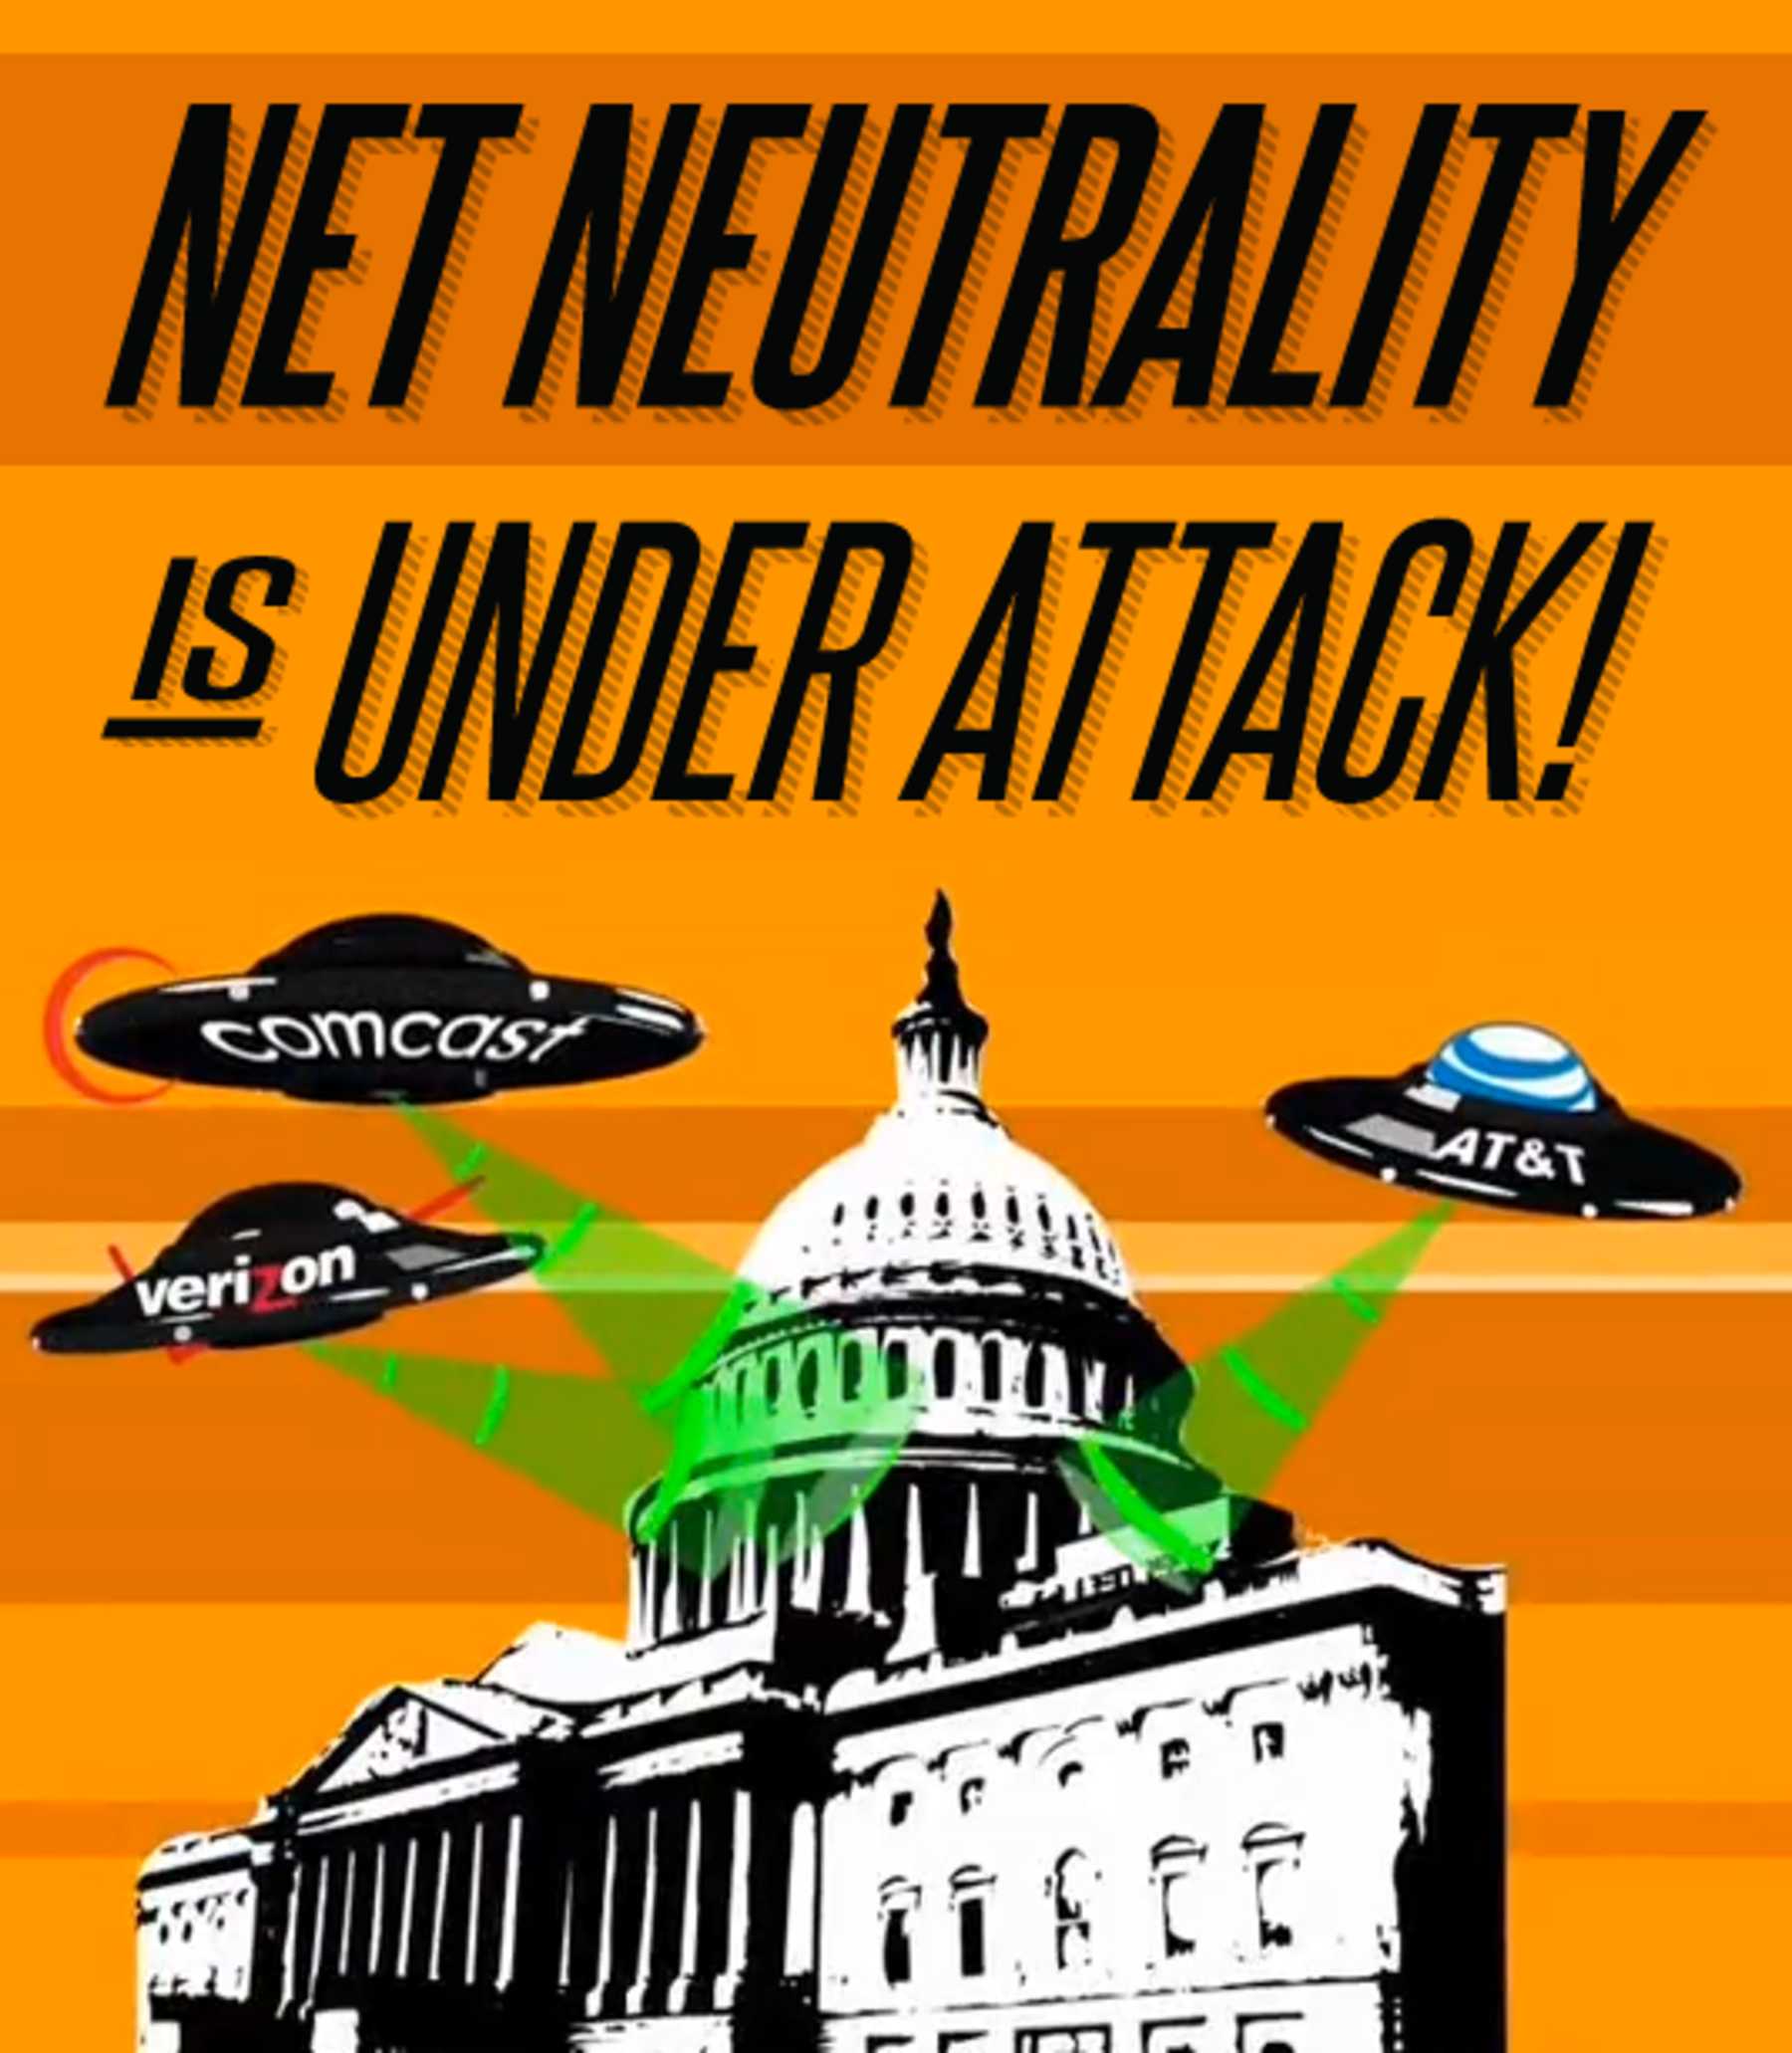 NetNeutralityUnderAttack